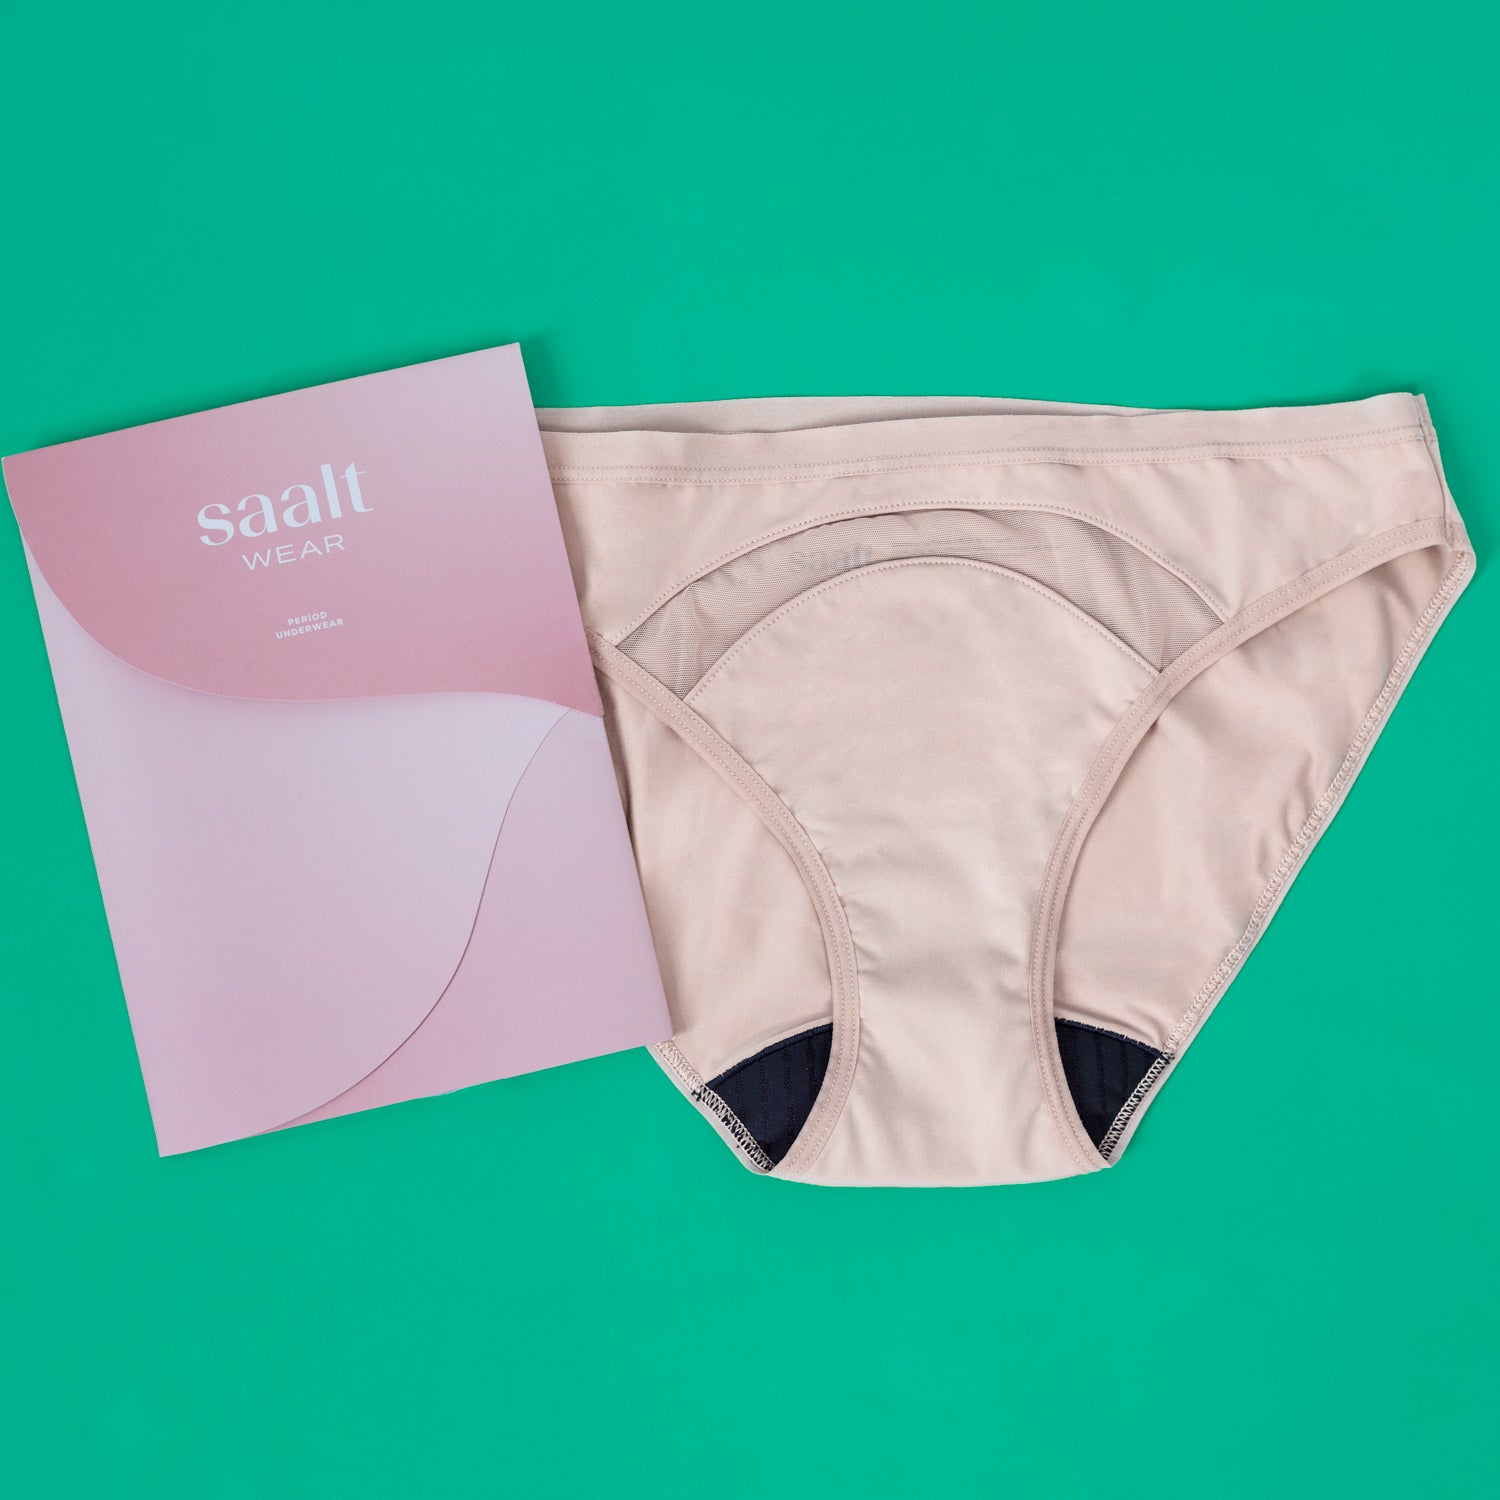 Saalt Soft Menstrual Cup (Desert Blush, Regular) & Cotton Brief Period 100%  Cotton Underwear (Medium) - Best Sensitive Reusable Period Cup - Wear for